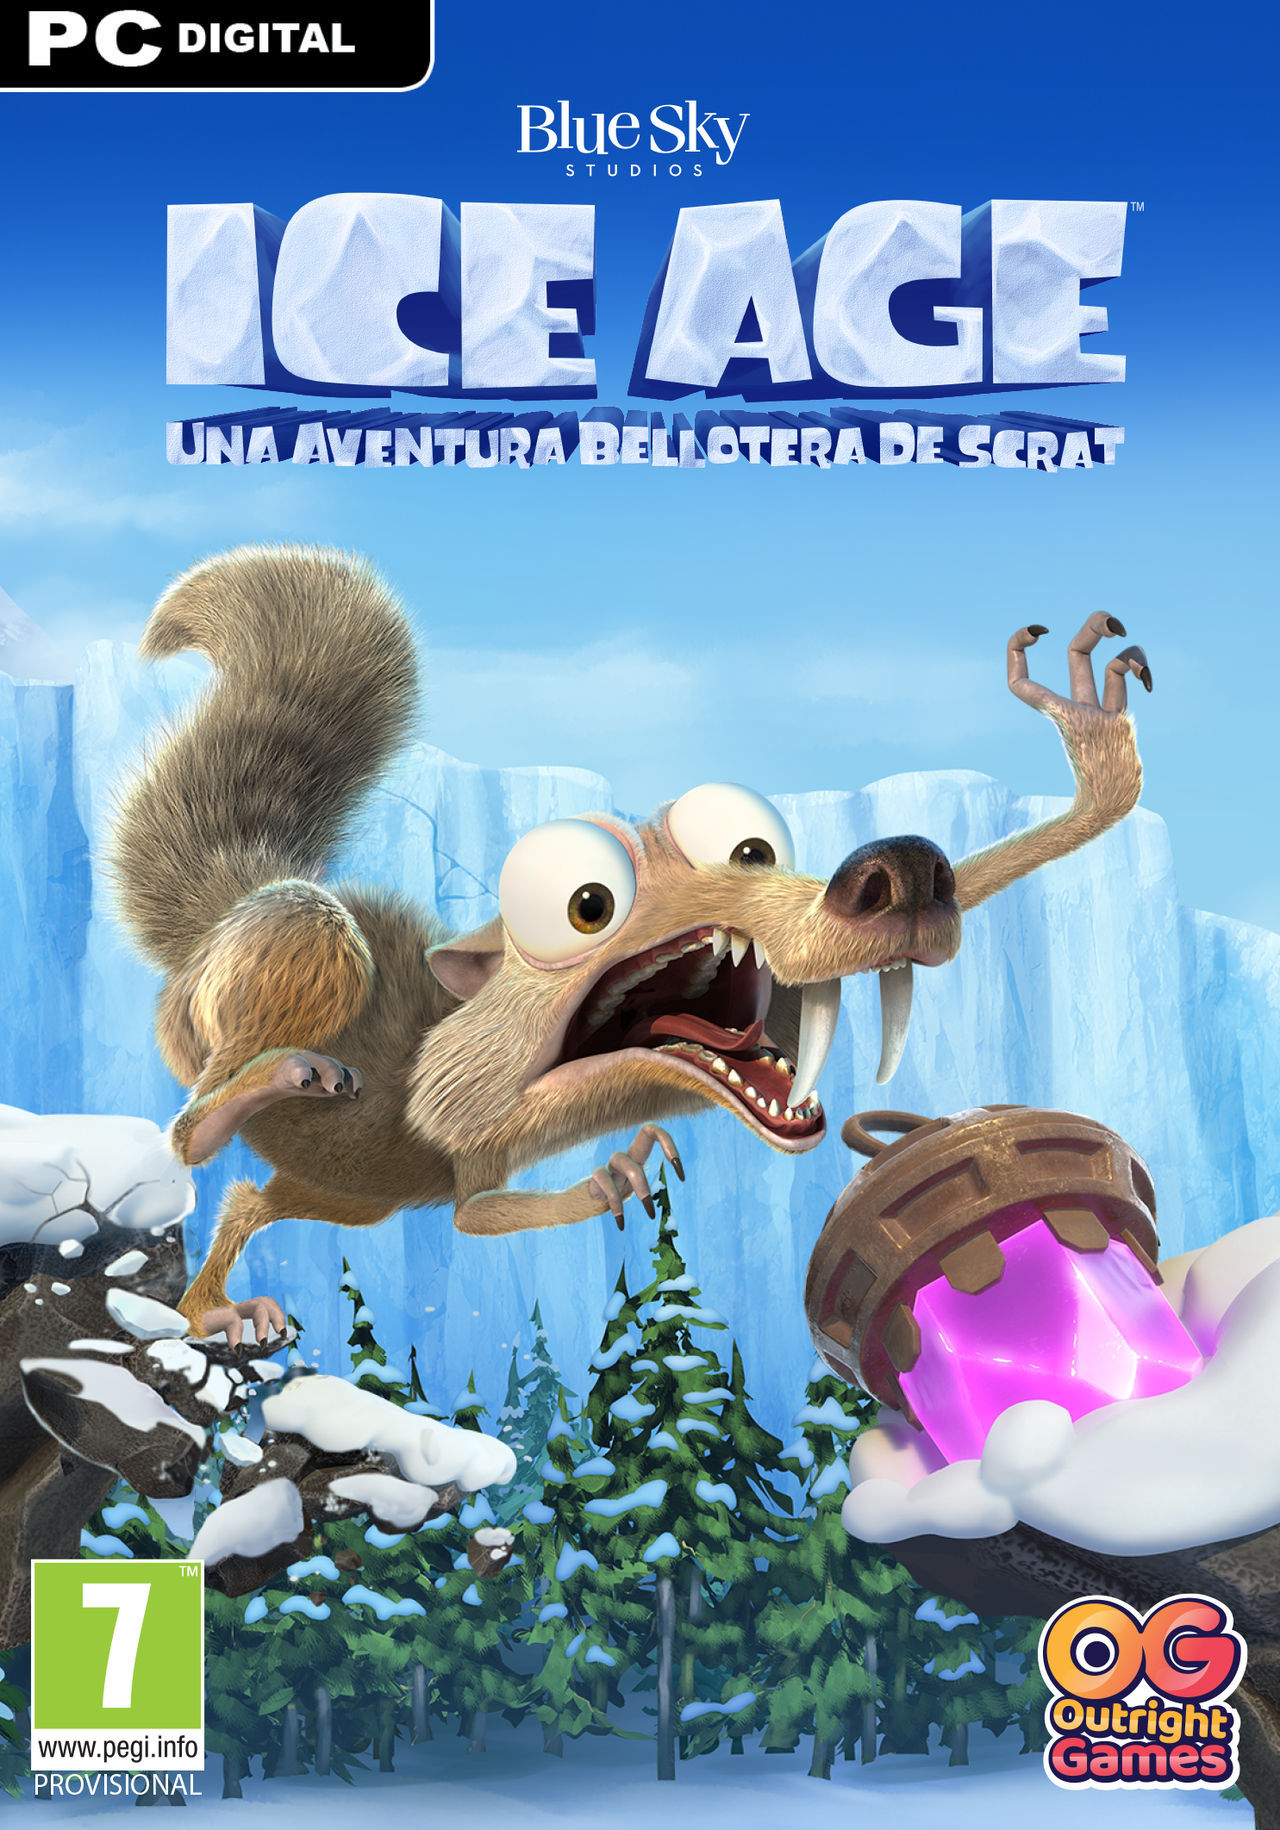 ice age scratz nutty adventure ps4